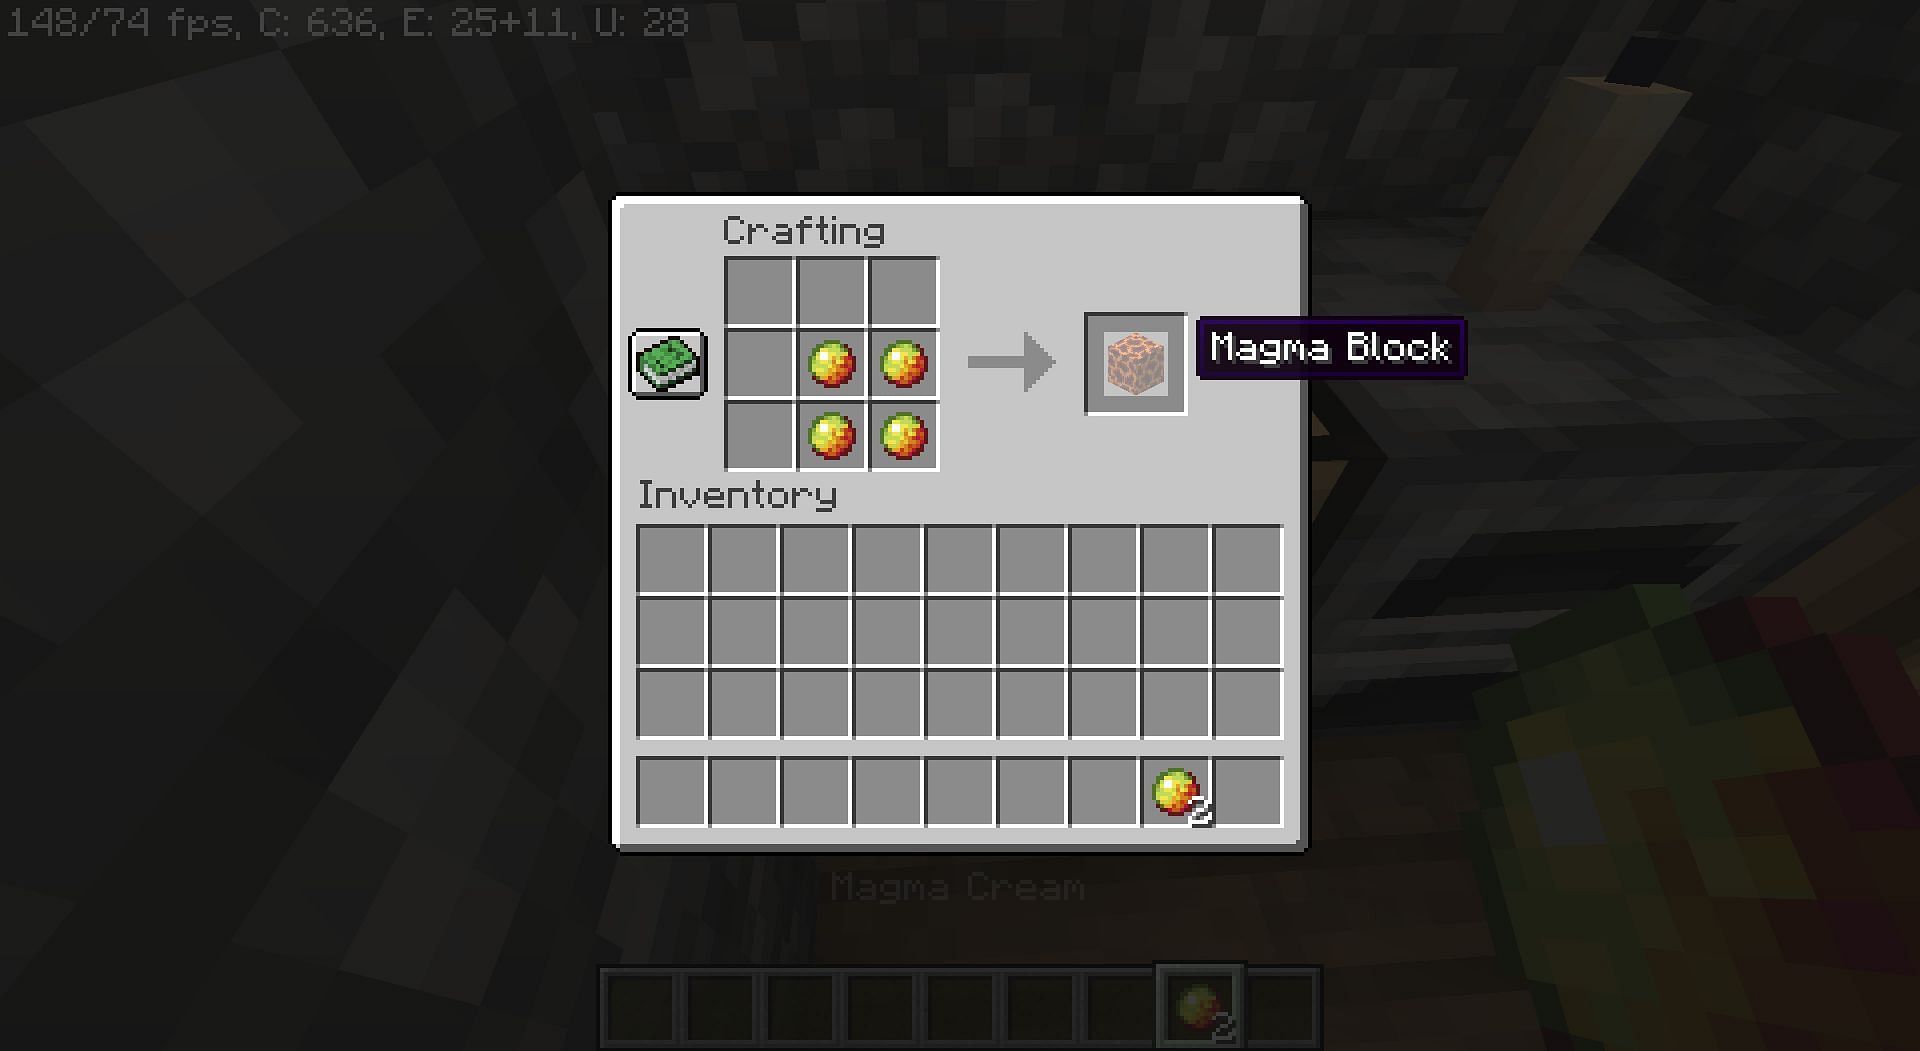 Magma Block crafting recipe (Image via Minecraft)